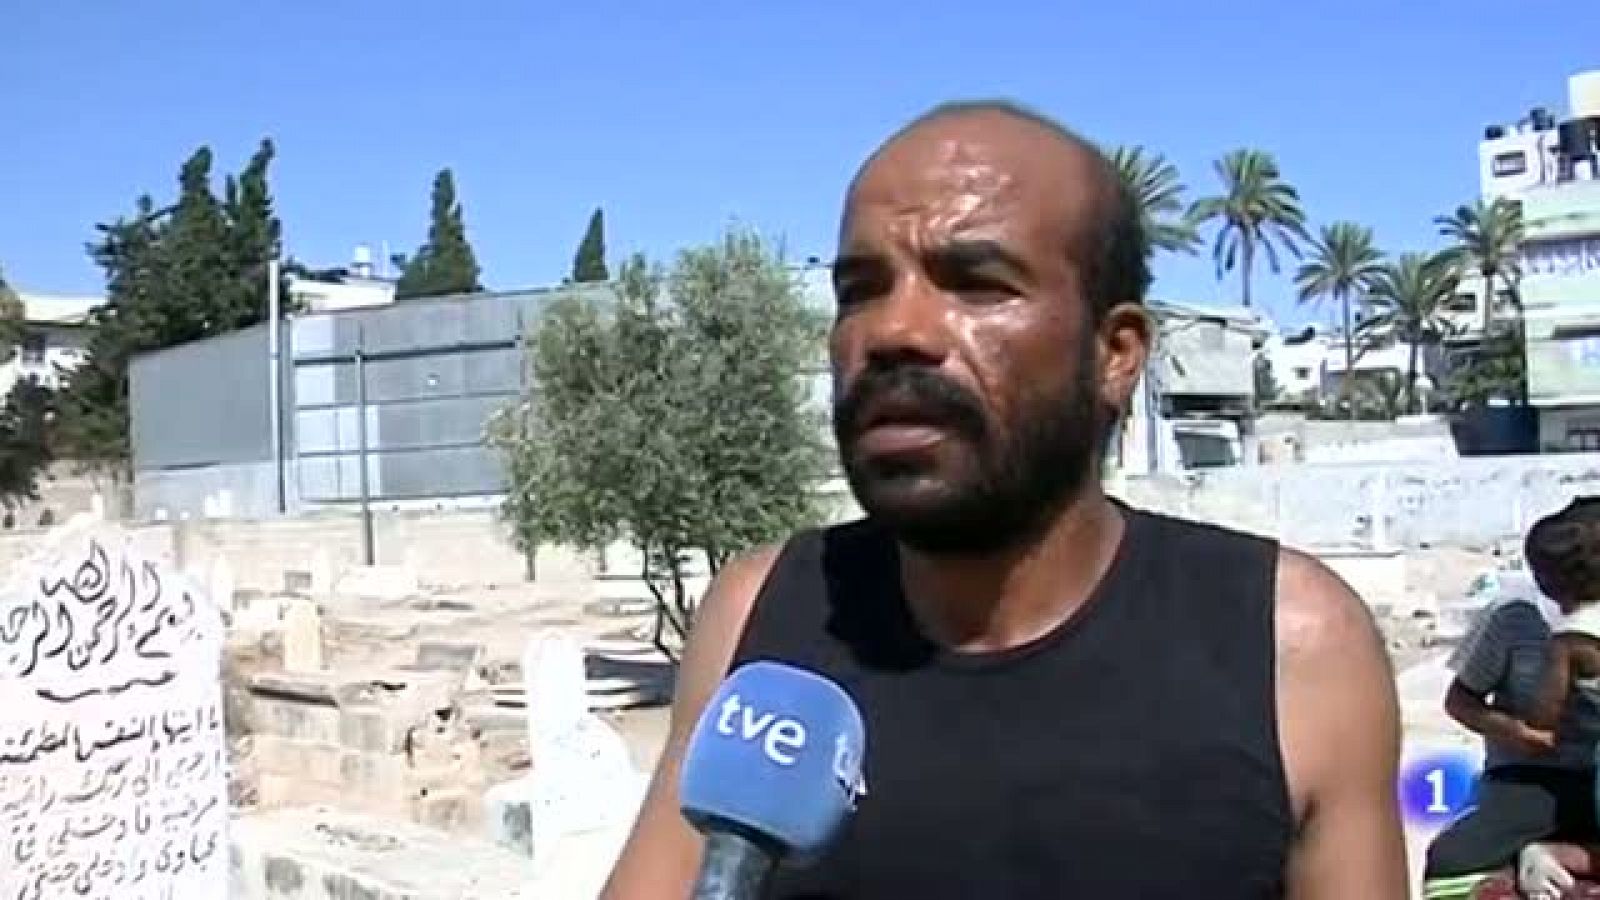 Telediario 1: Vivir entre tumbas, otra forma de sobrevivir en Gaza | RTVE Play